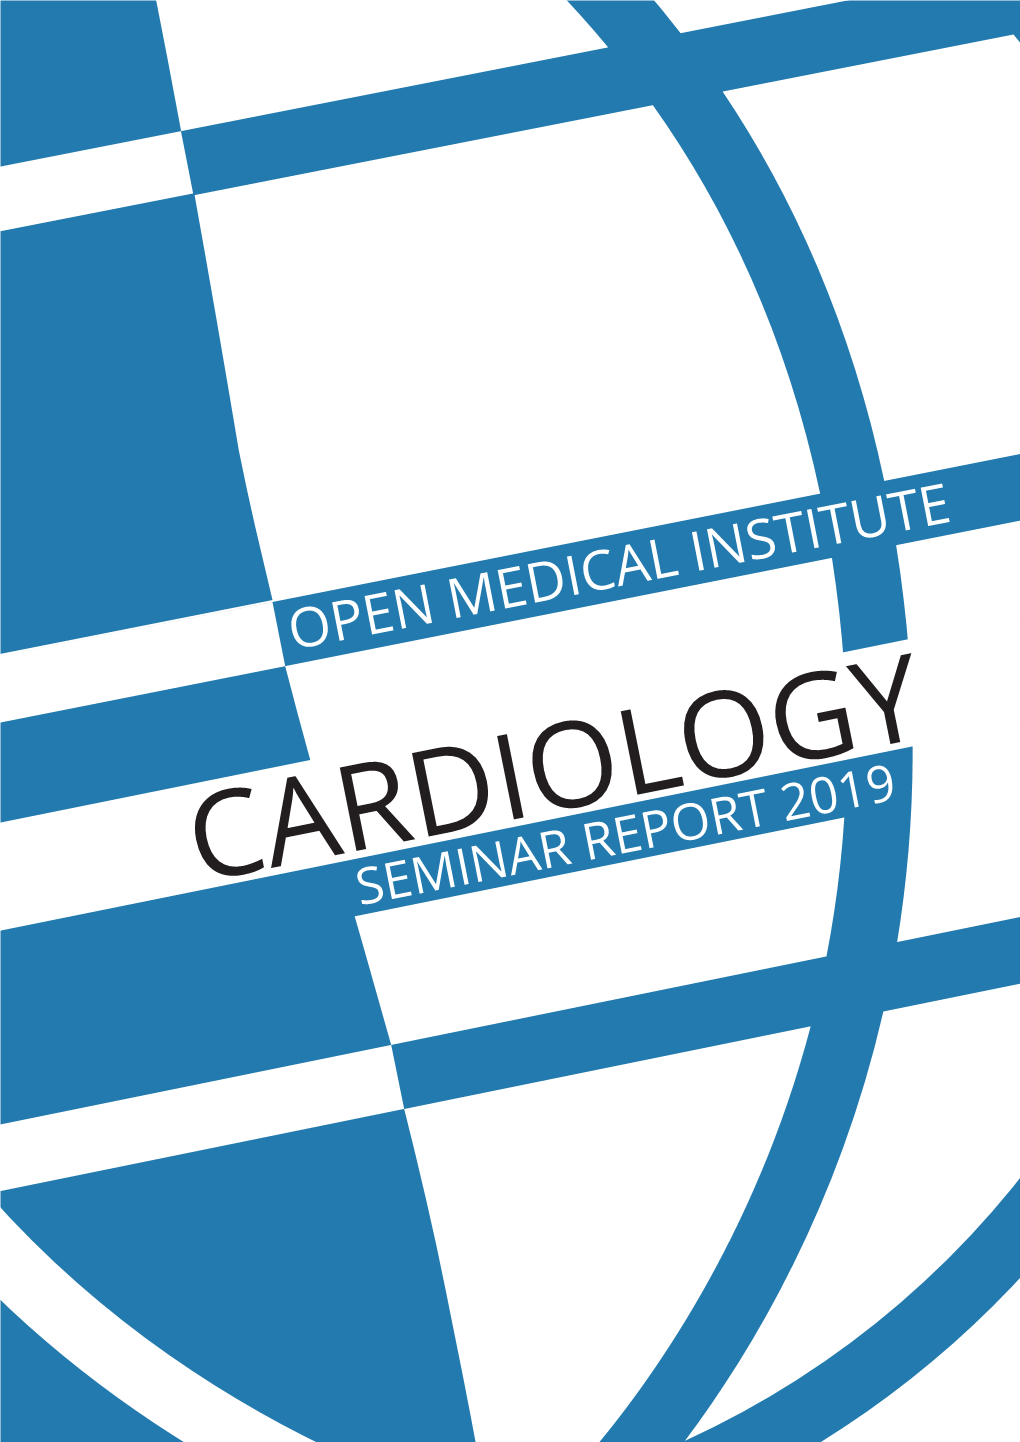 Cardiologyseminar Report 2019